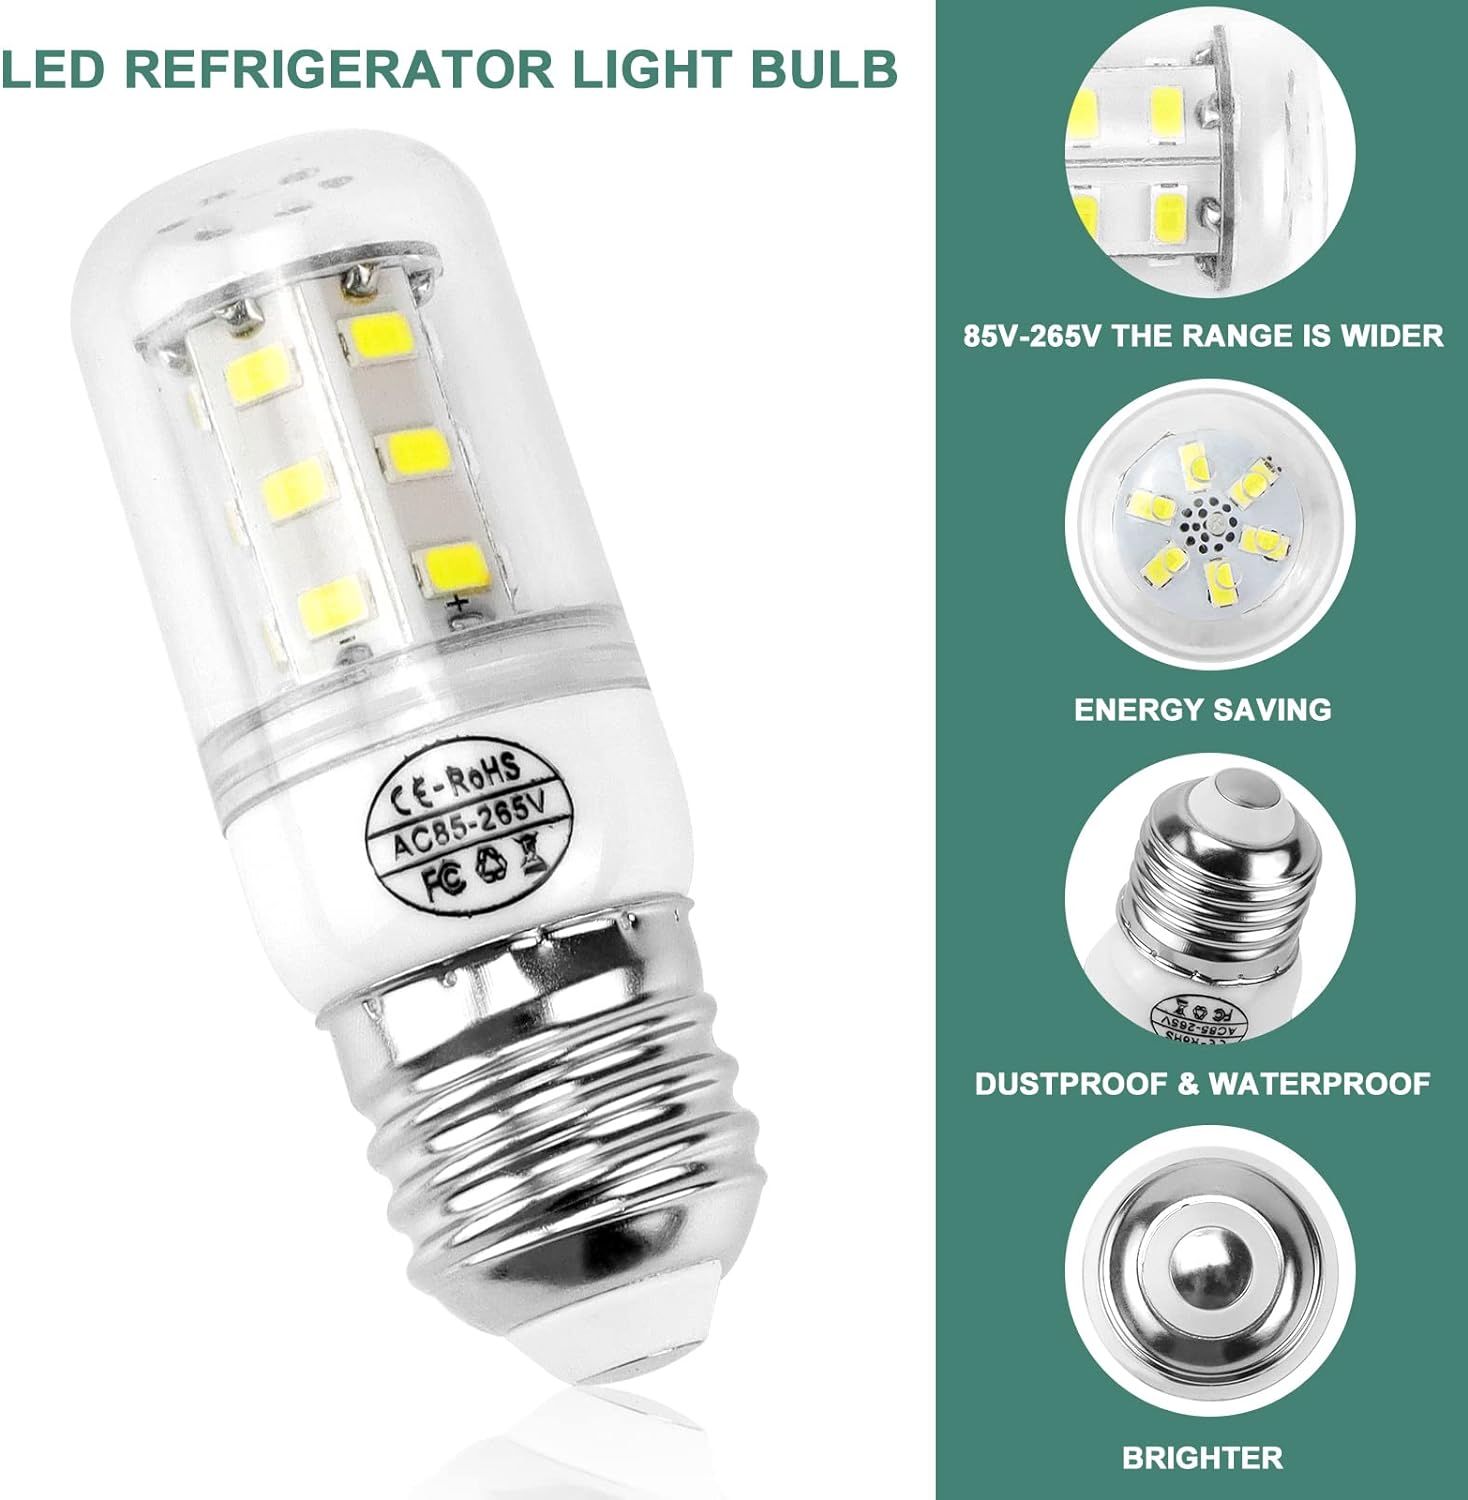 AMI PARTS Refrigerator Light Bulb KEI D34L Bulb Fit for Frigidaire Kenmore 5304511738 Refrigerator Light Bulb Replace AP6278388 PS12364857(3.5W 85V-265V Appliance Bulb White Light)-2Packs